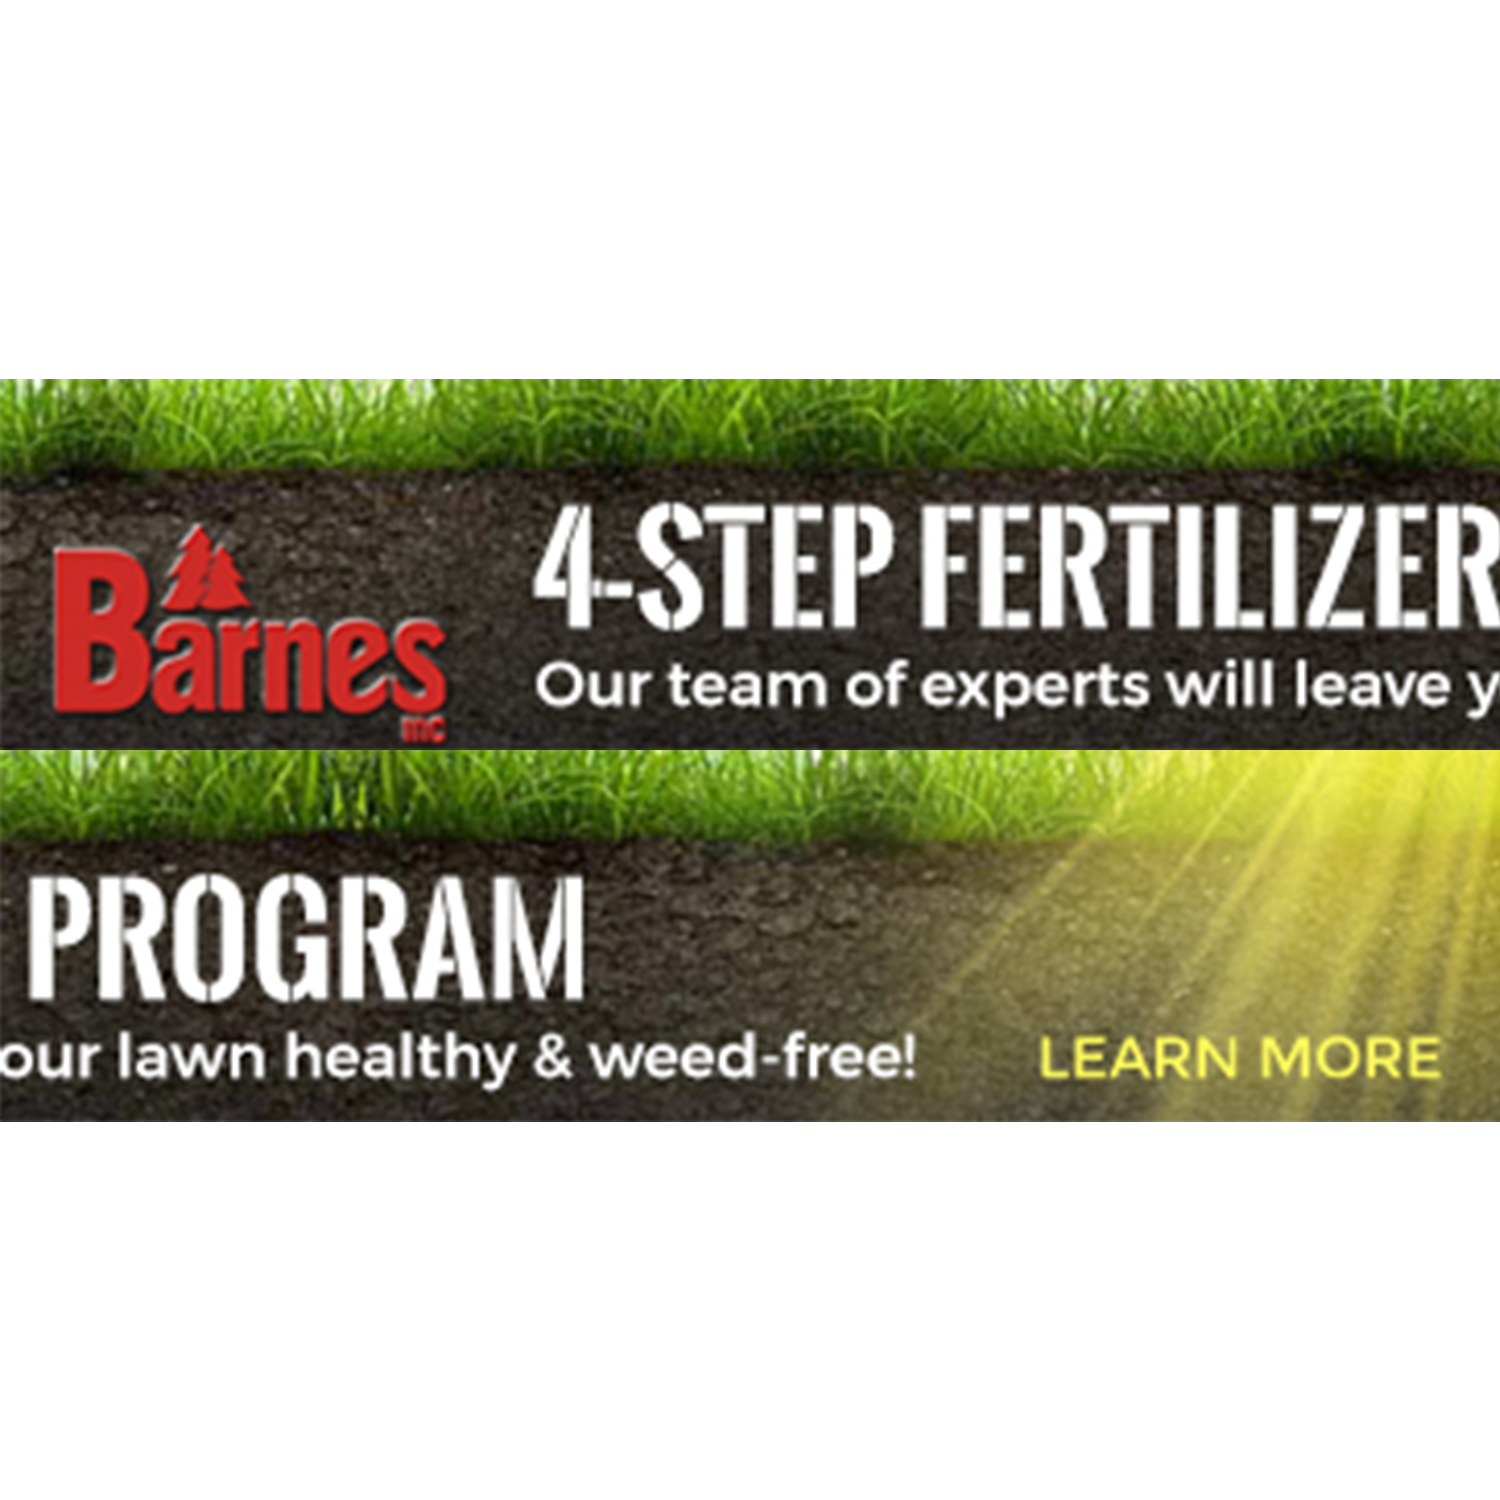 Barnes 4-Step Fertilizer